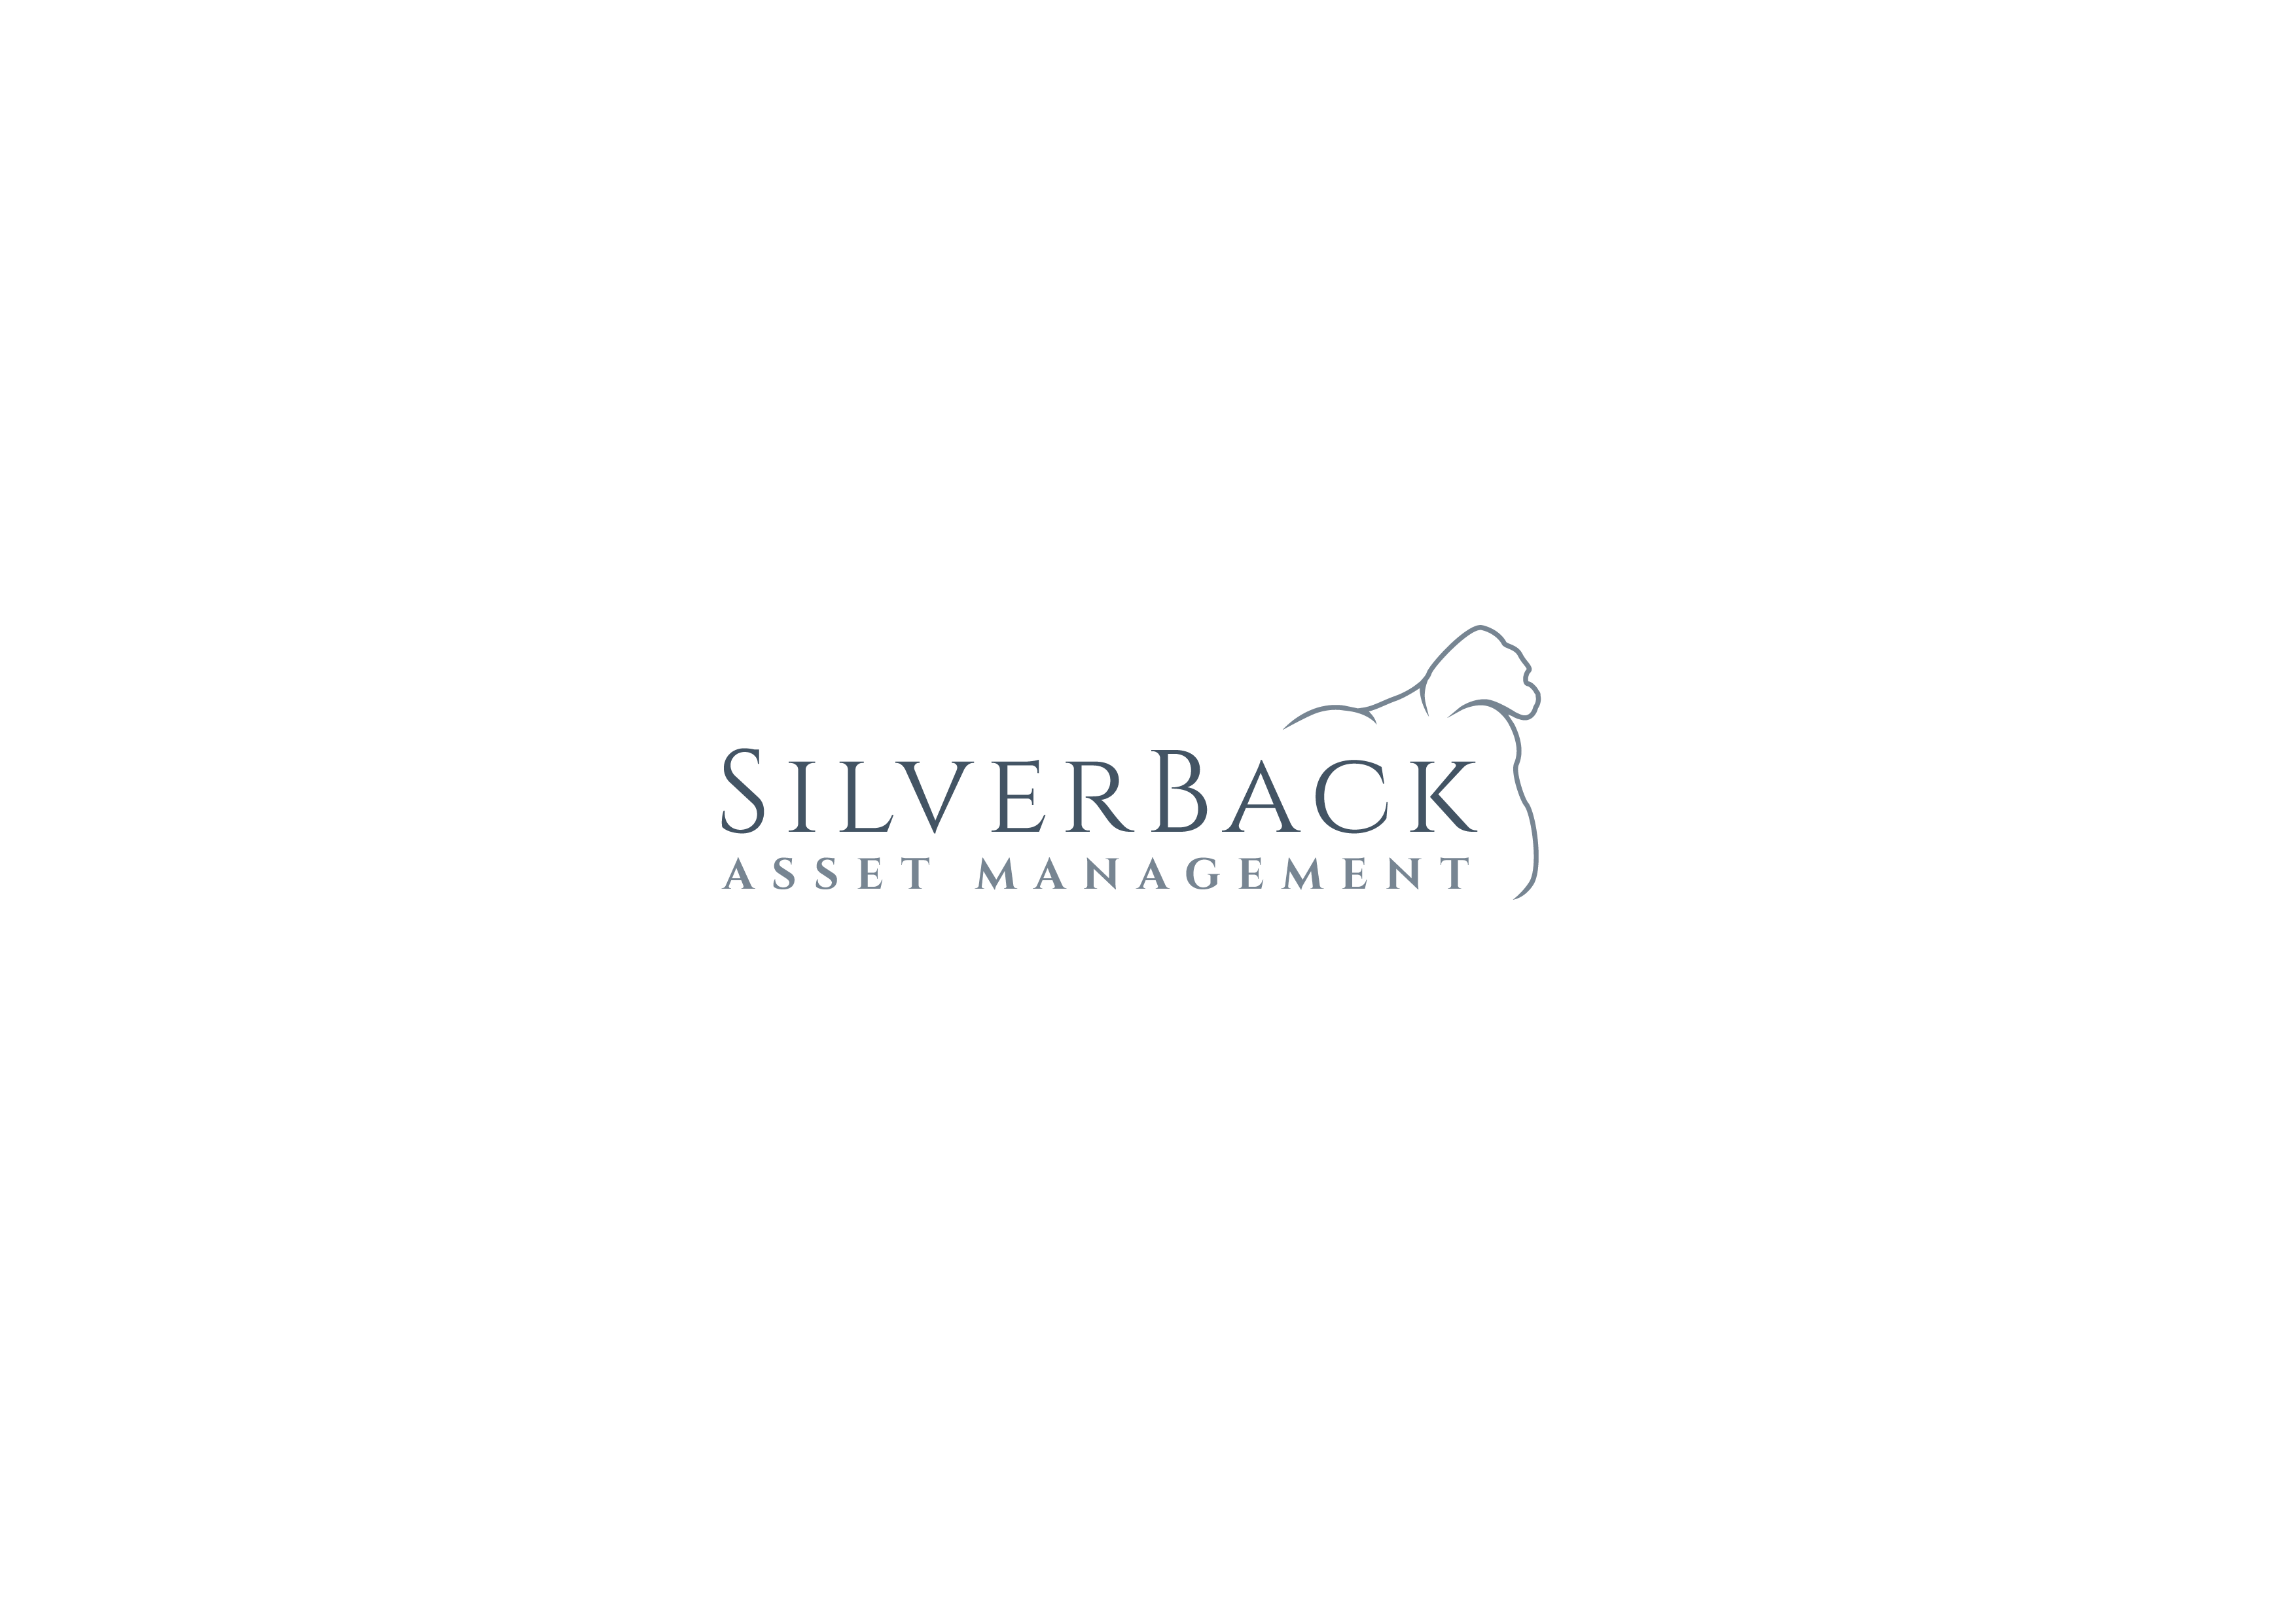 Silverback narrow -01